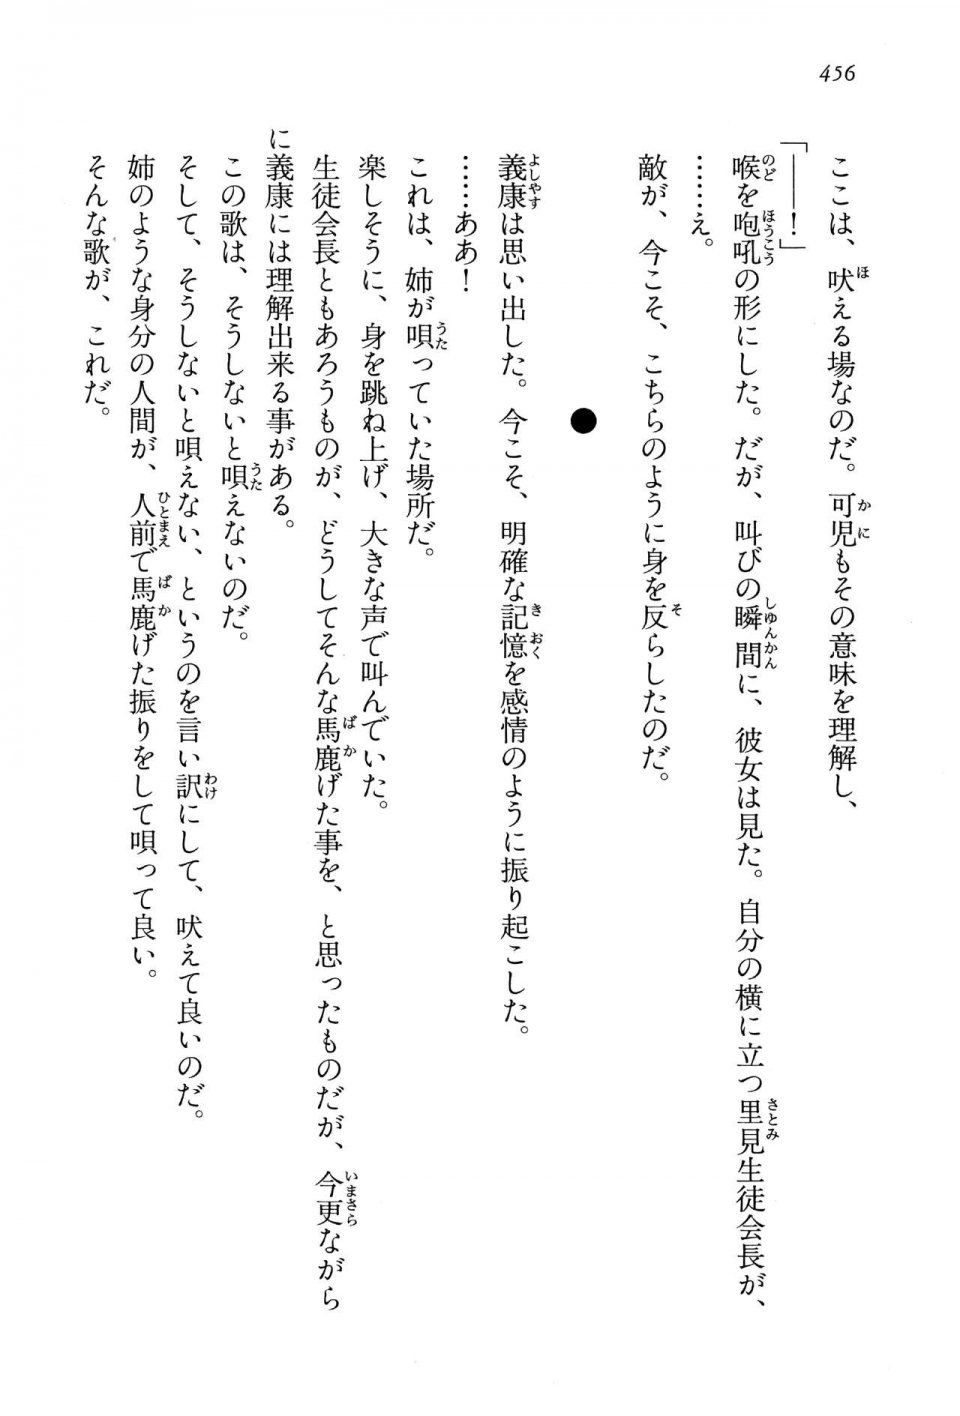 Kyoukai Senjou no Horizon LN Vol 15(6C) Part 1 - Photo #456